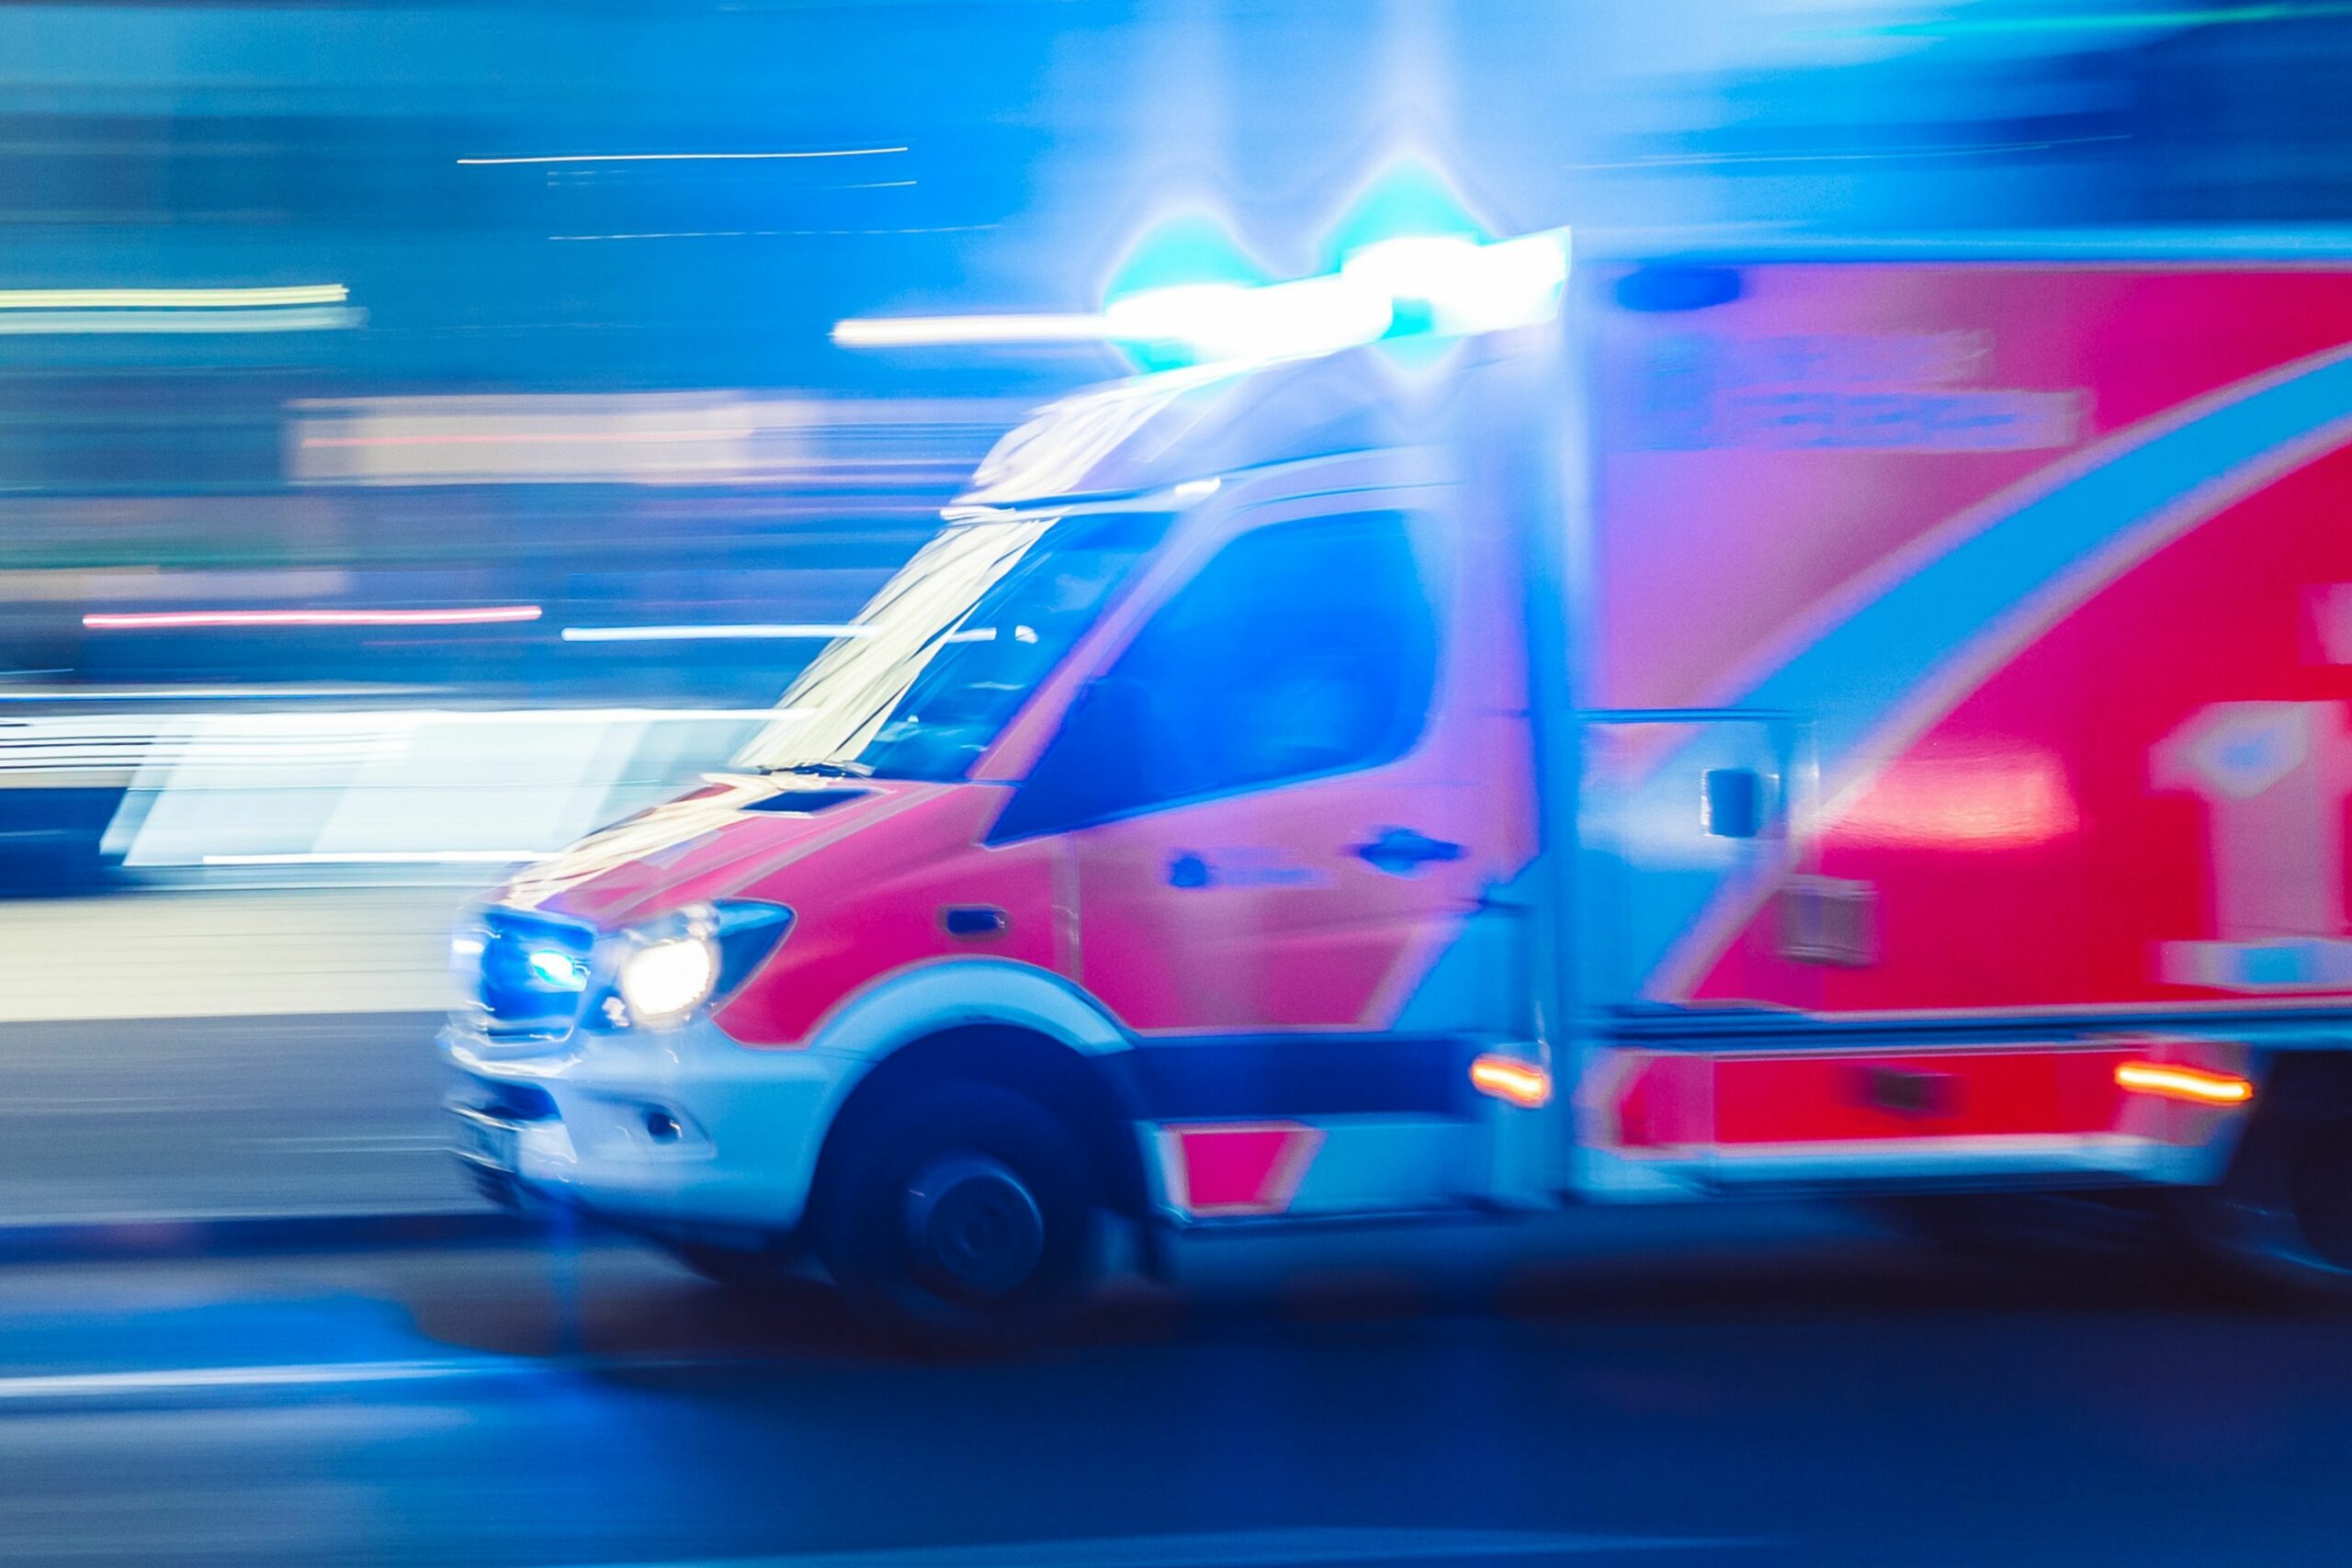 Baden-Württemberg Stuttgart-Bad Cannstatt Krankentransport nach Unfall (Symbolbild)